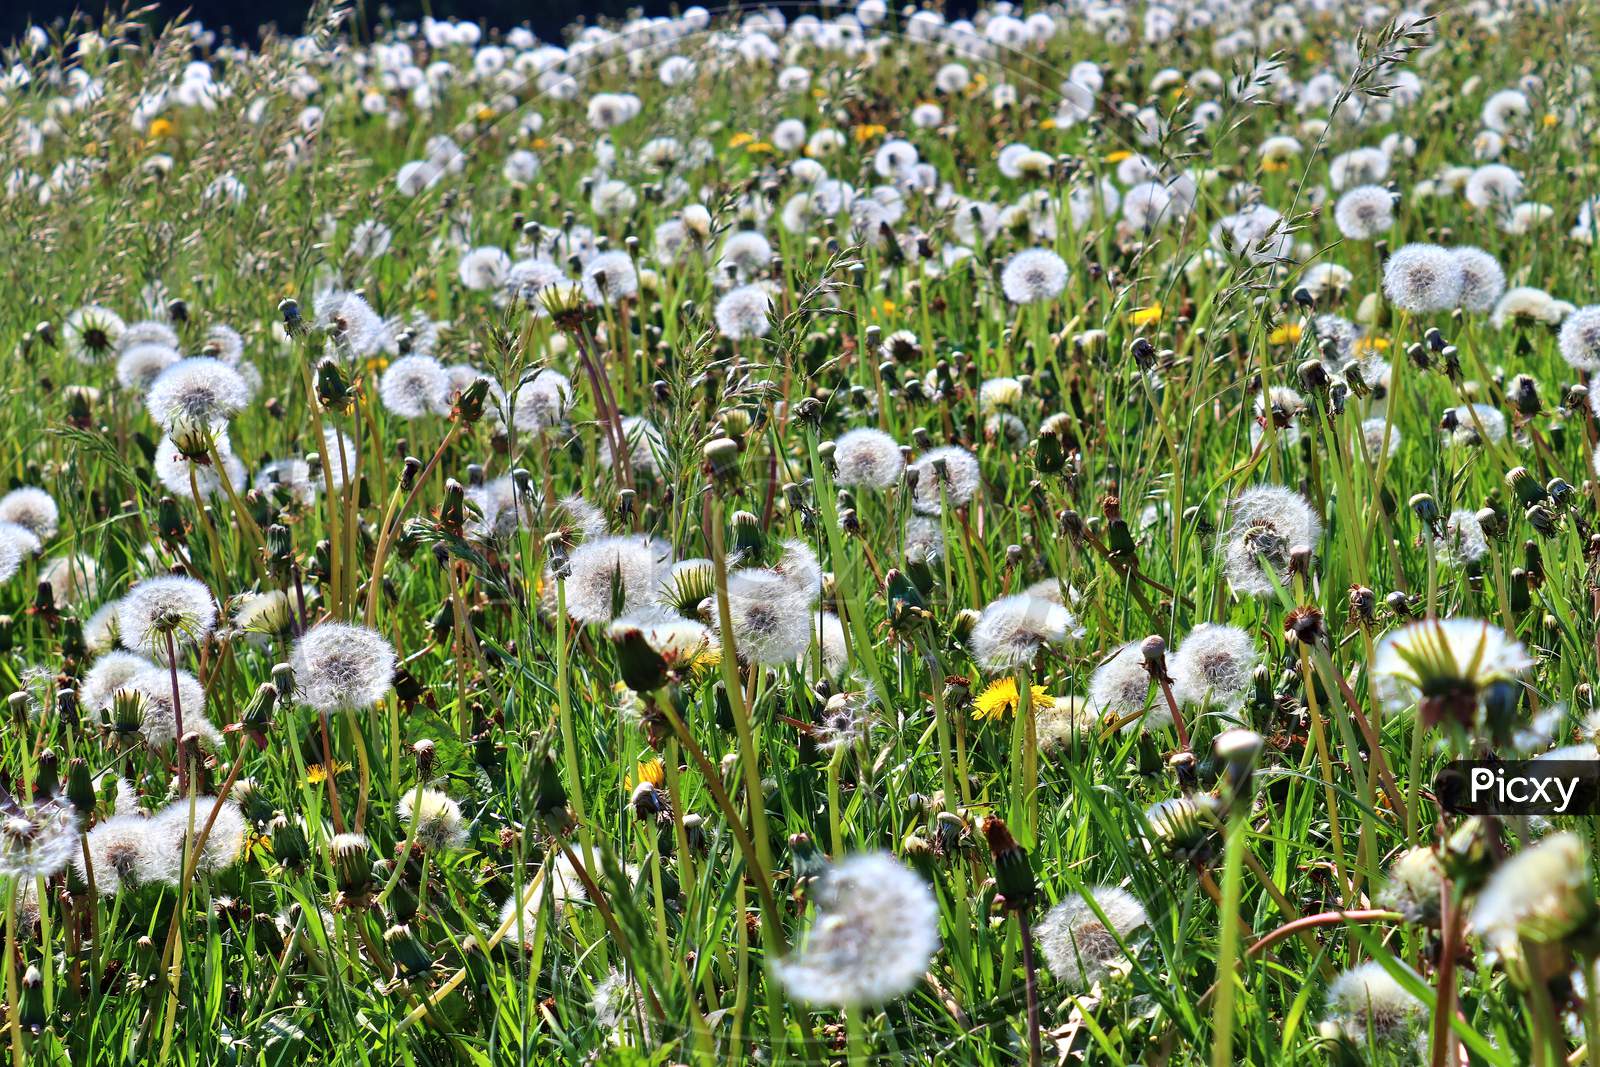 Green meadow with lots of dandelion blowballs